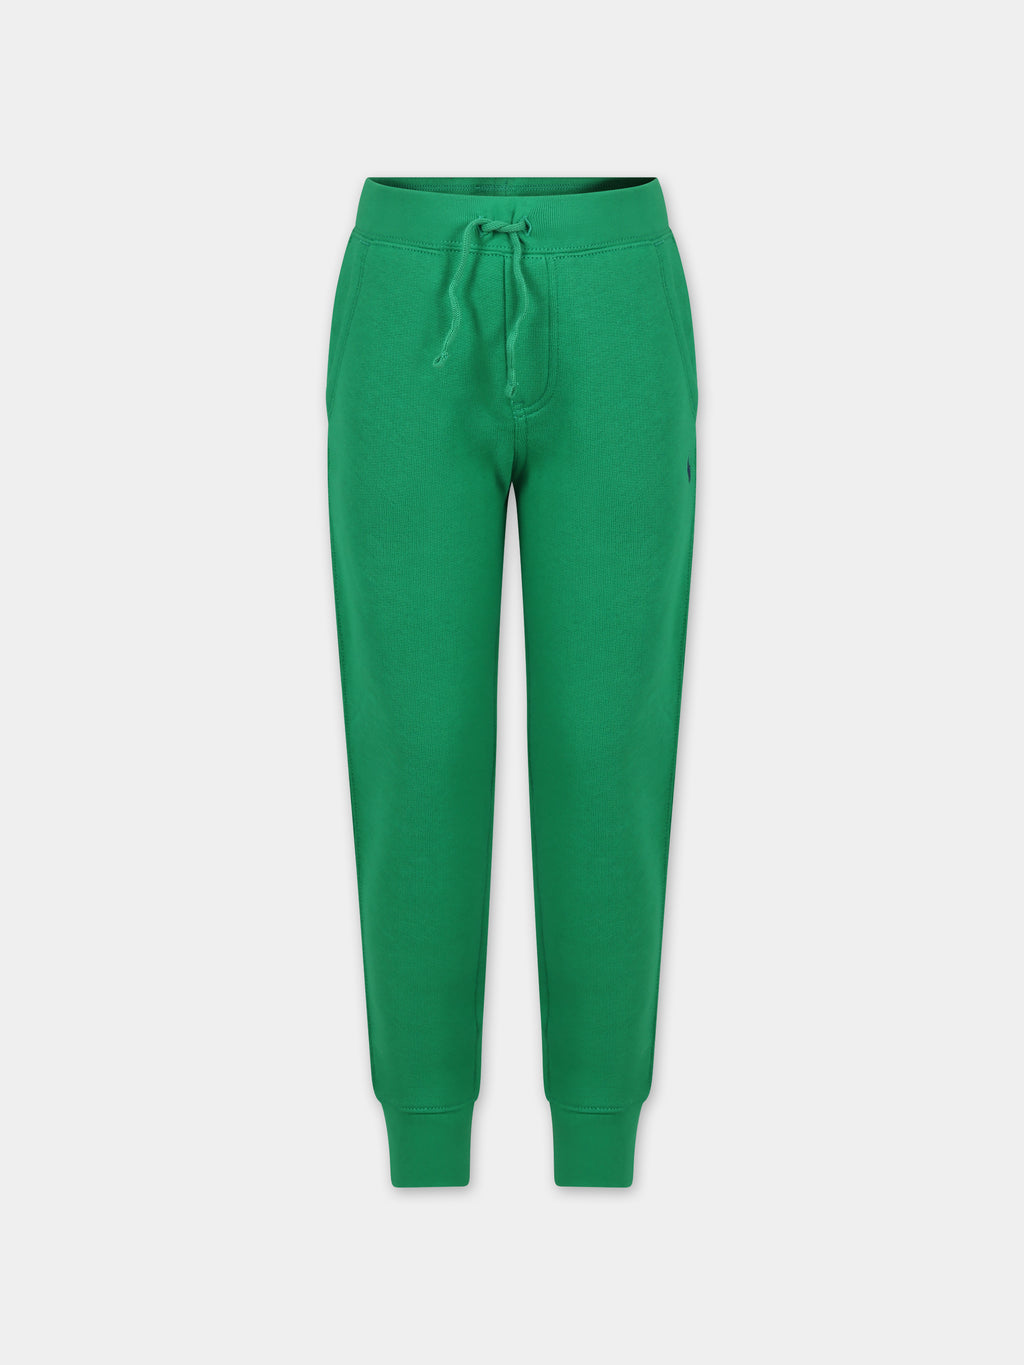 Pantaloni verdi per bambino